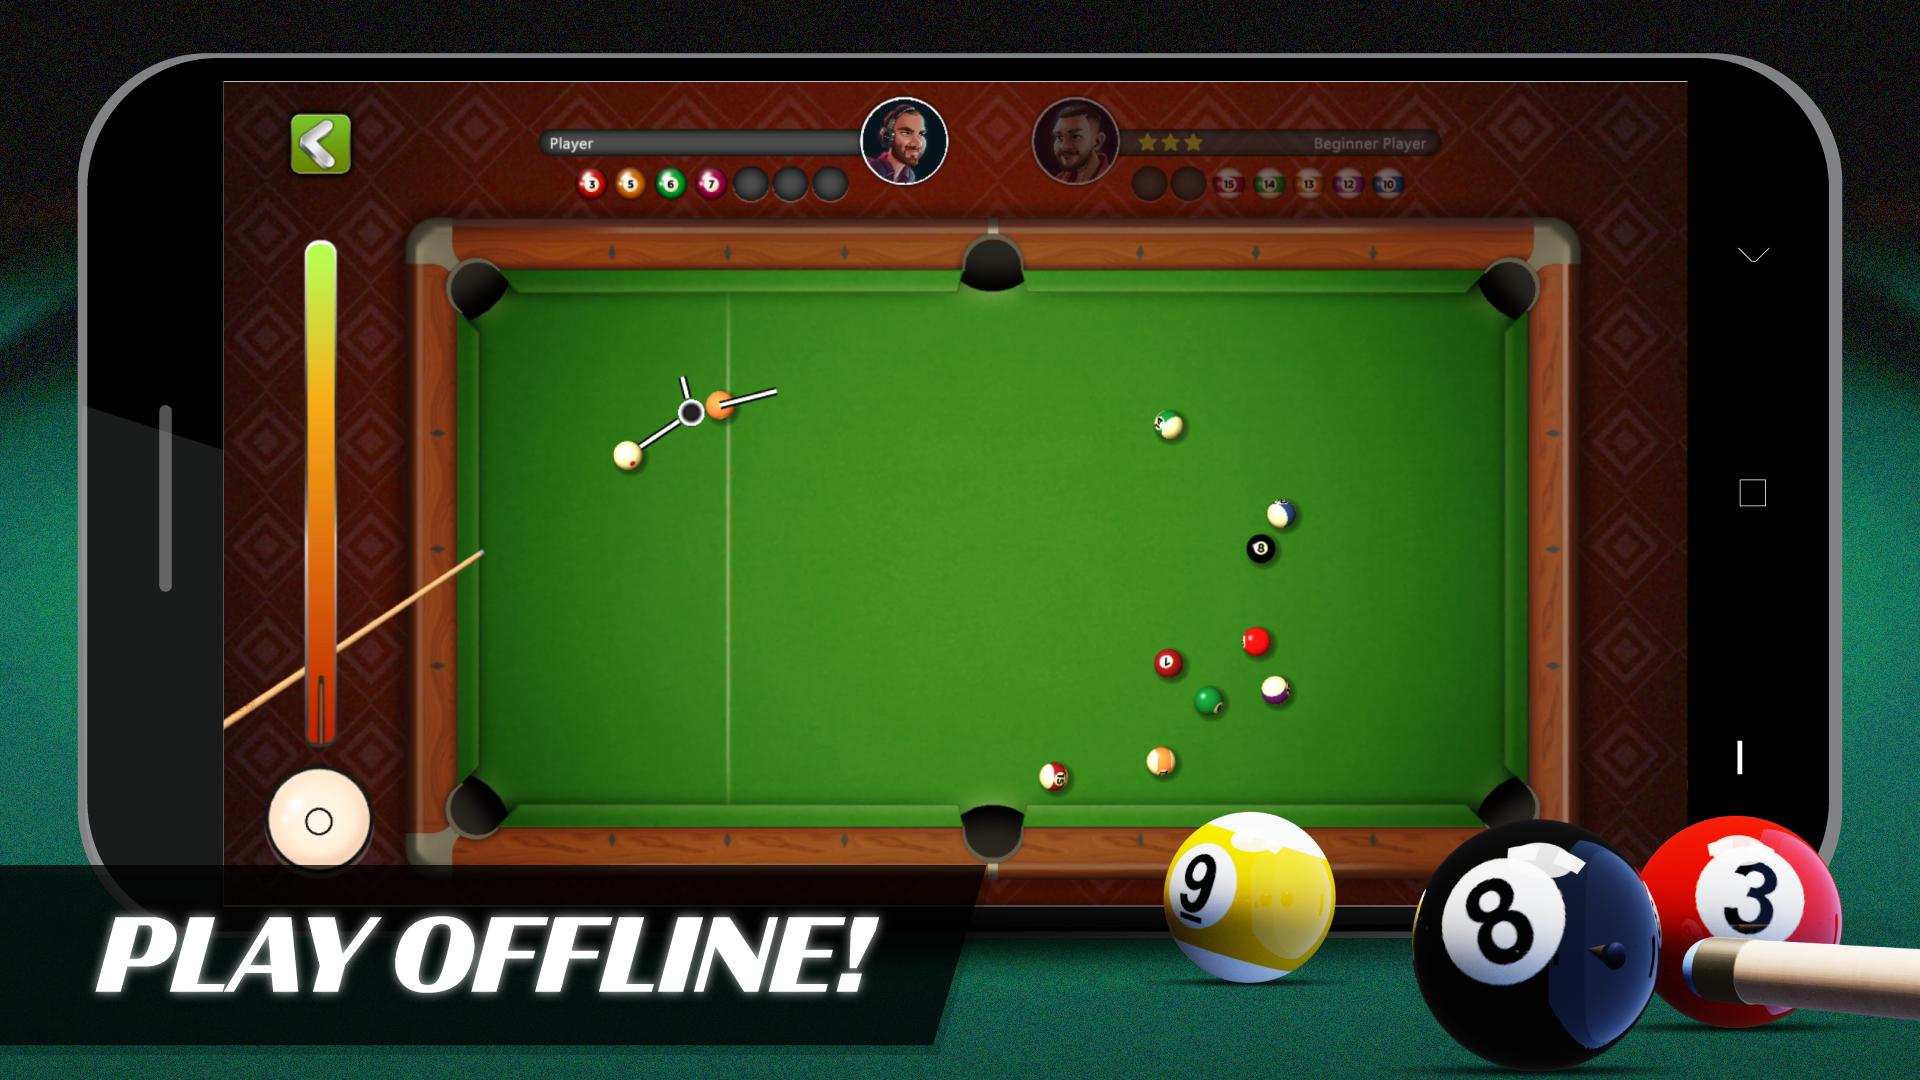 8 Ball Billiards- Offline Free Pool Game 1.51 Screenshot 17